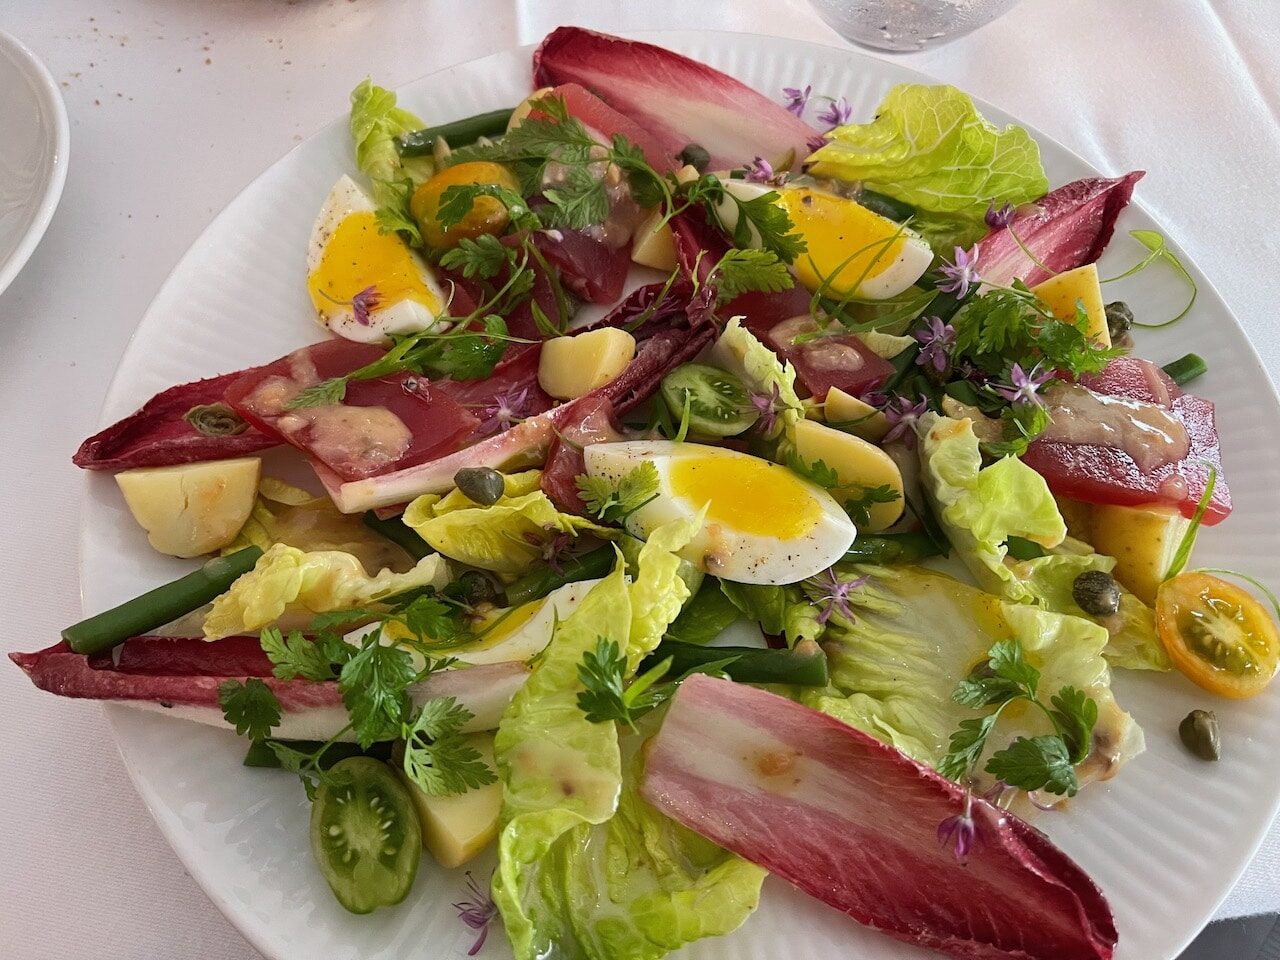 Salad nicoise at Restaurant Salon